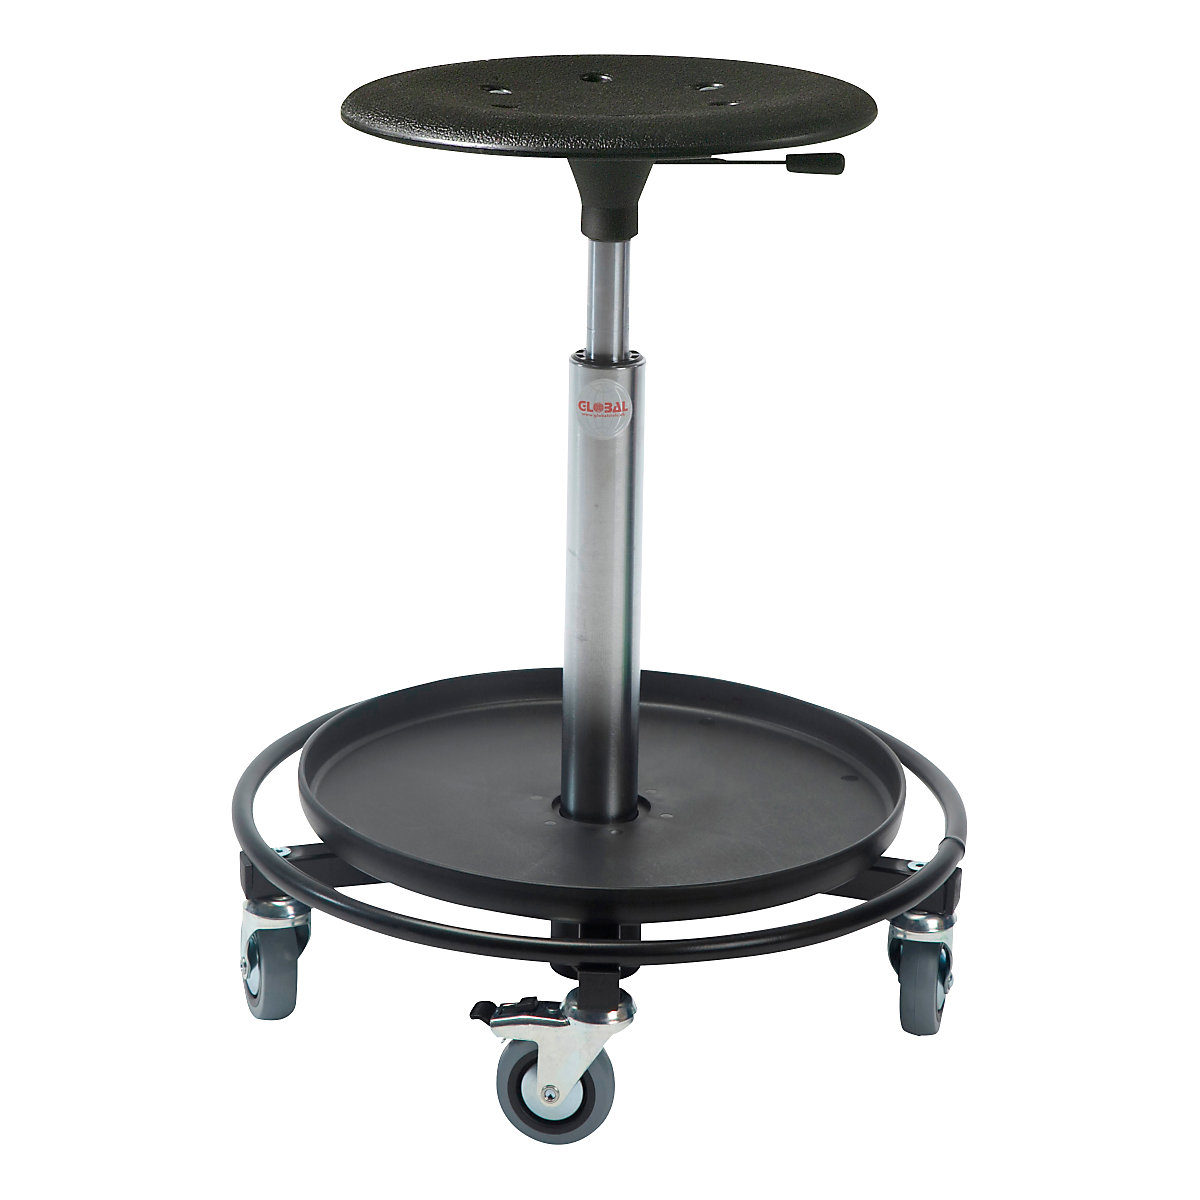 https://images.kkeu.de/is/image/BEG/Industrial_chairs/Industrial_stools_anti-fatigue_stools/Welding_and_workshop_stool_pdplarge-mrd--536986_AFS_00_00_00_5261741.jpg